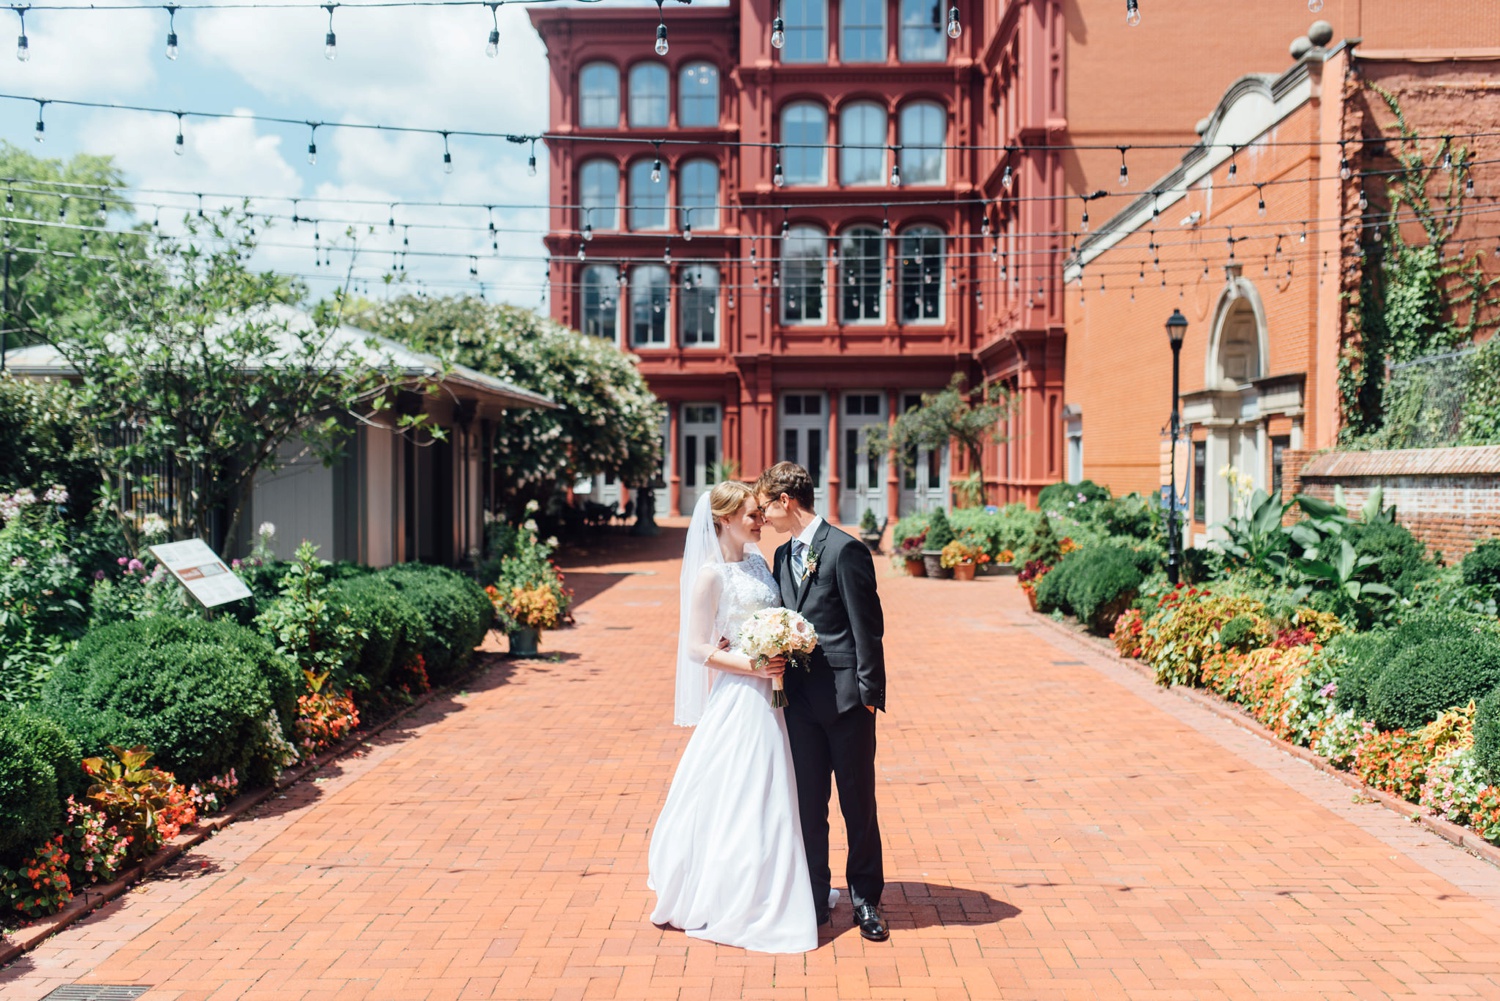 Hannah + Scott - 1840's Plaza - Baltimore Wedding Photographer - Alison Dunn Photography photo